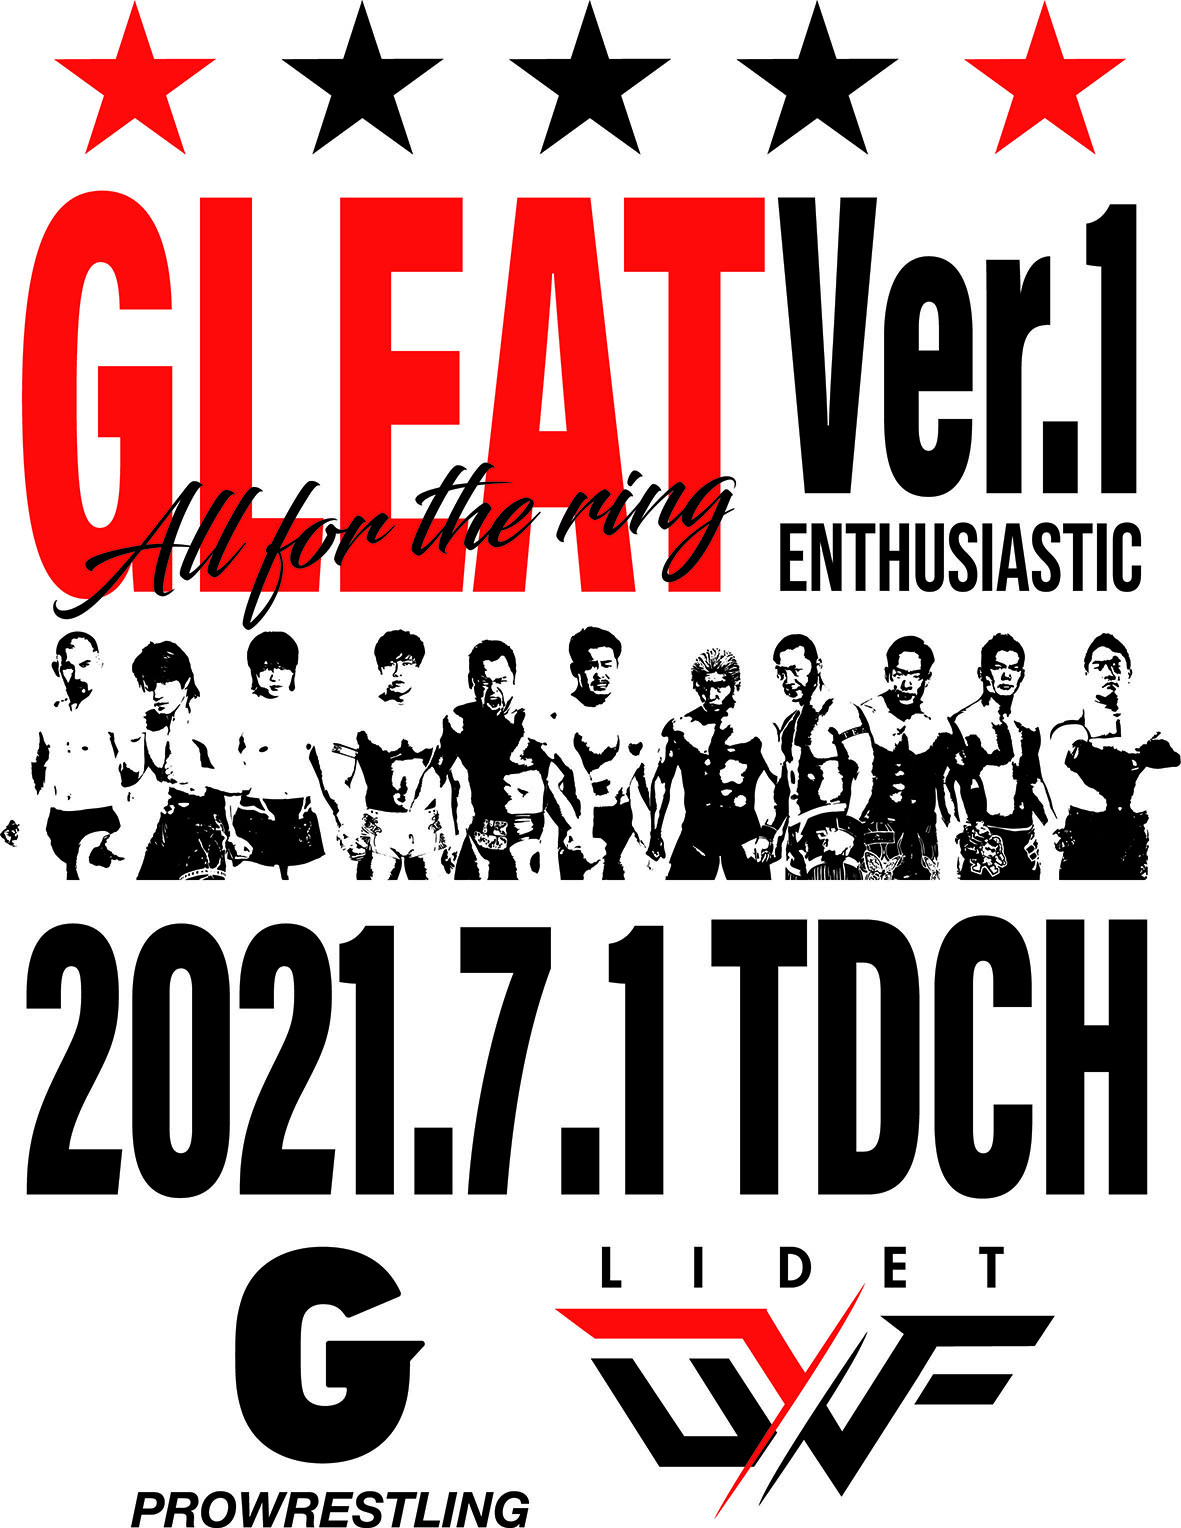 【GLEAT Ver.1】 大会記念Tシャツ [旗揚げ記念] WHITE画像